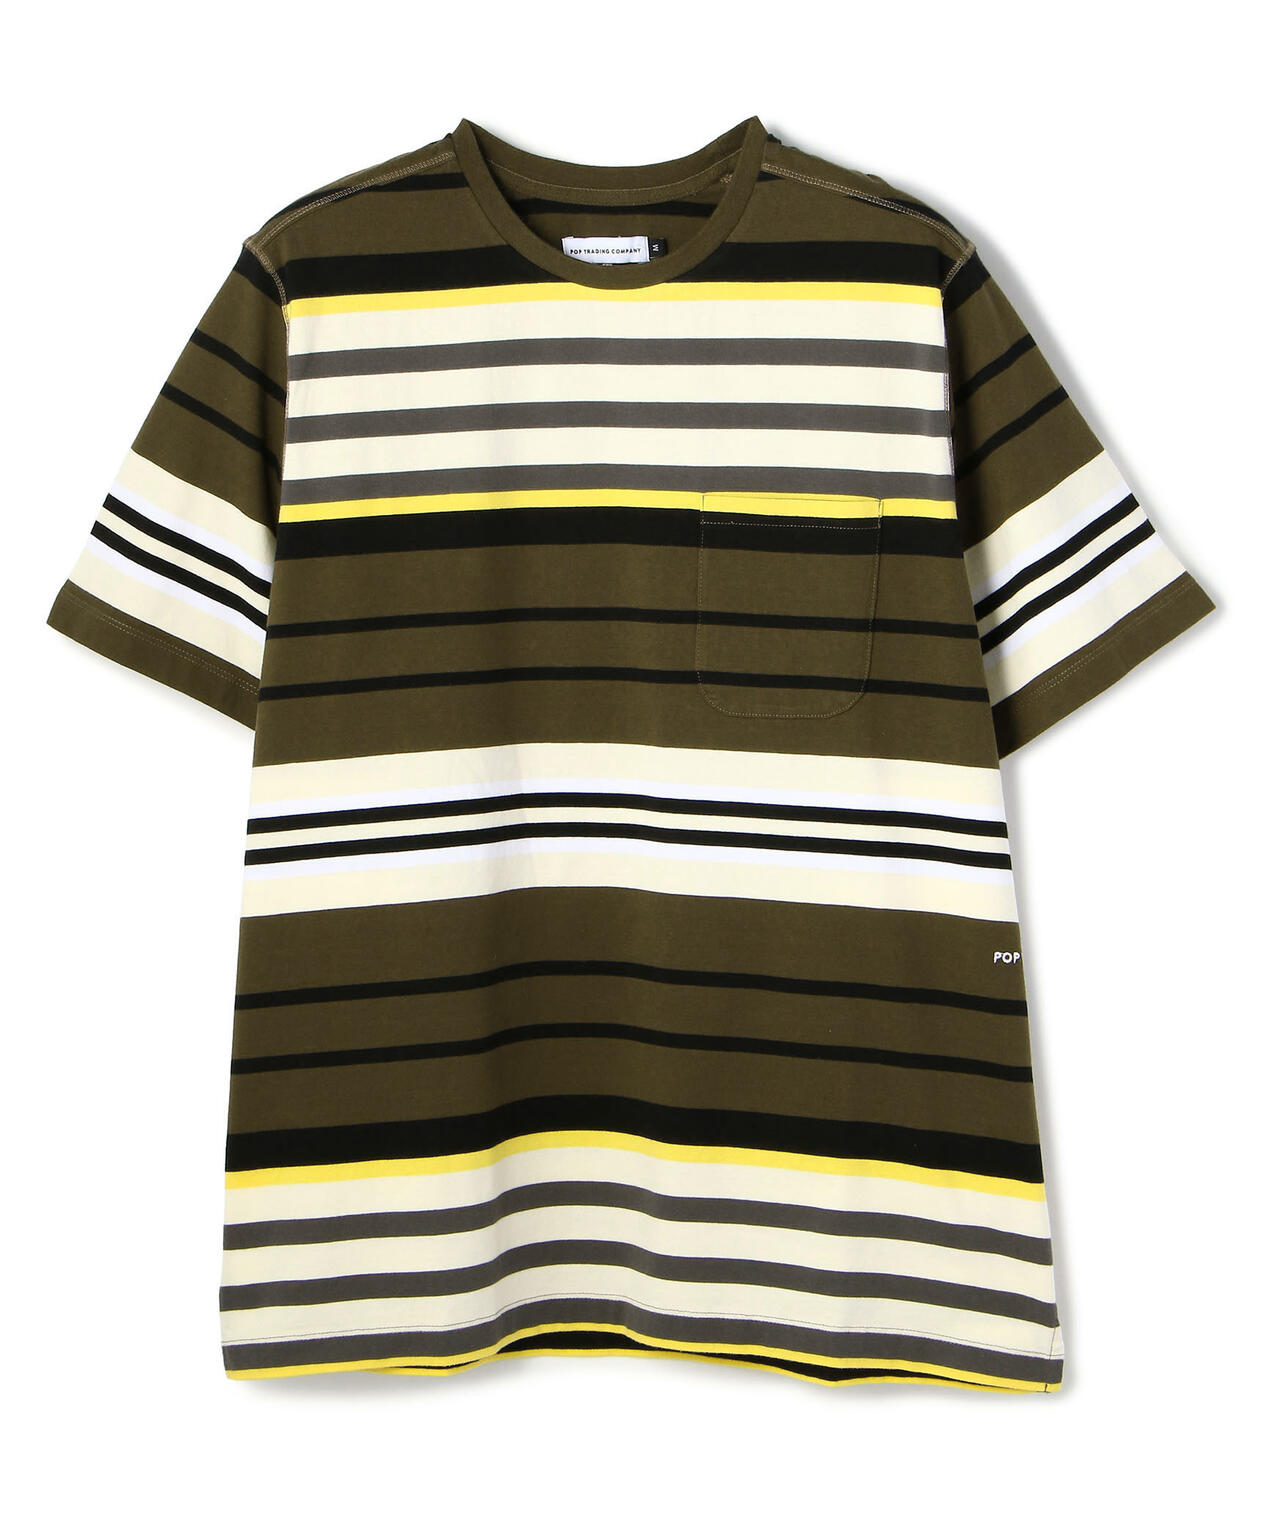 POP TRADING COMPANY/ポップトレーディングカンパニー/striped pocket t-shirt